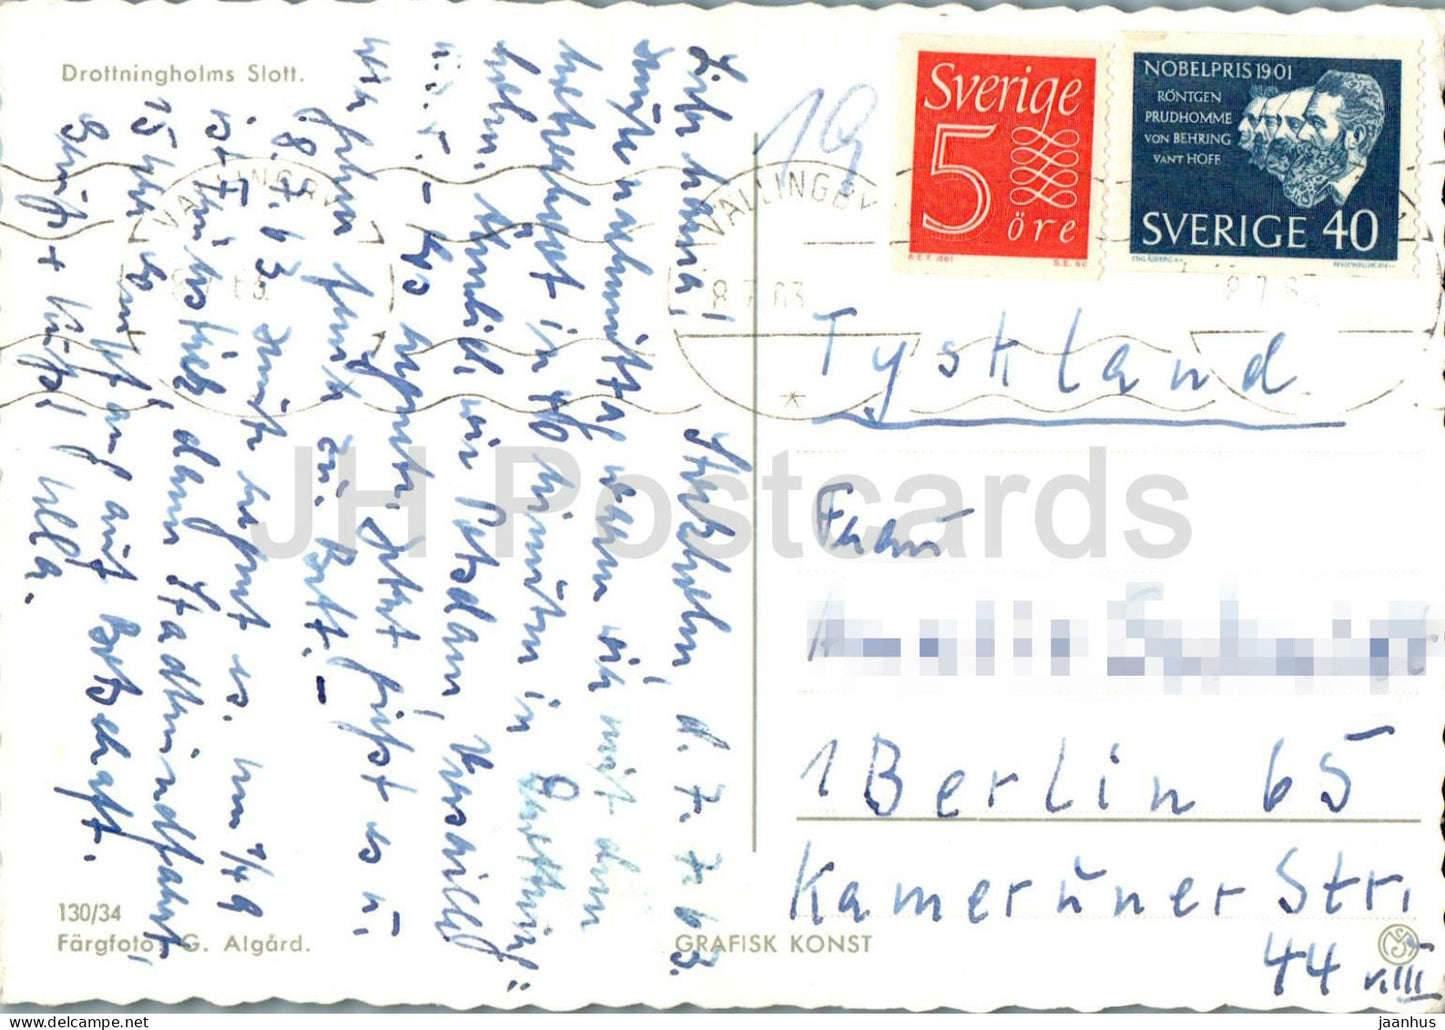 Drottningholms Slott - Schloss - 130/34 - 1963 - Schweden - gebraucht 